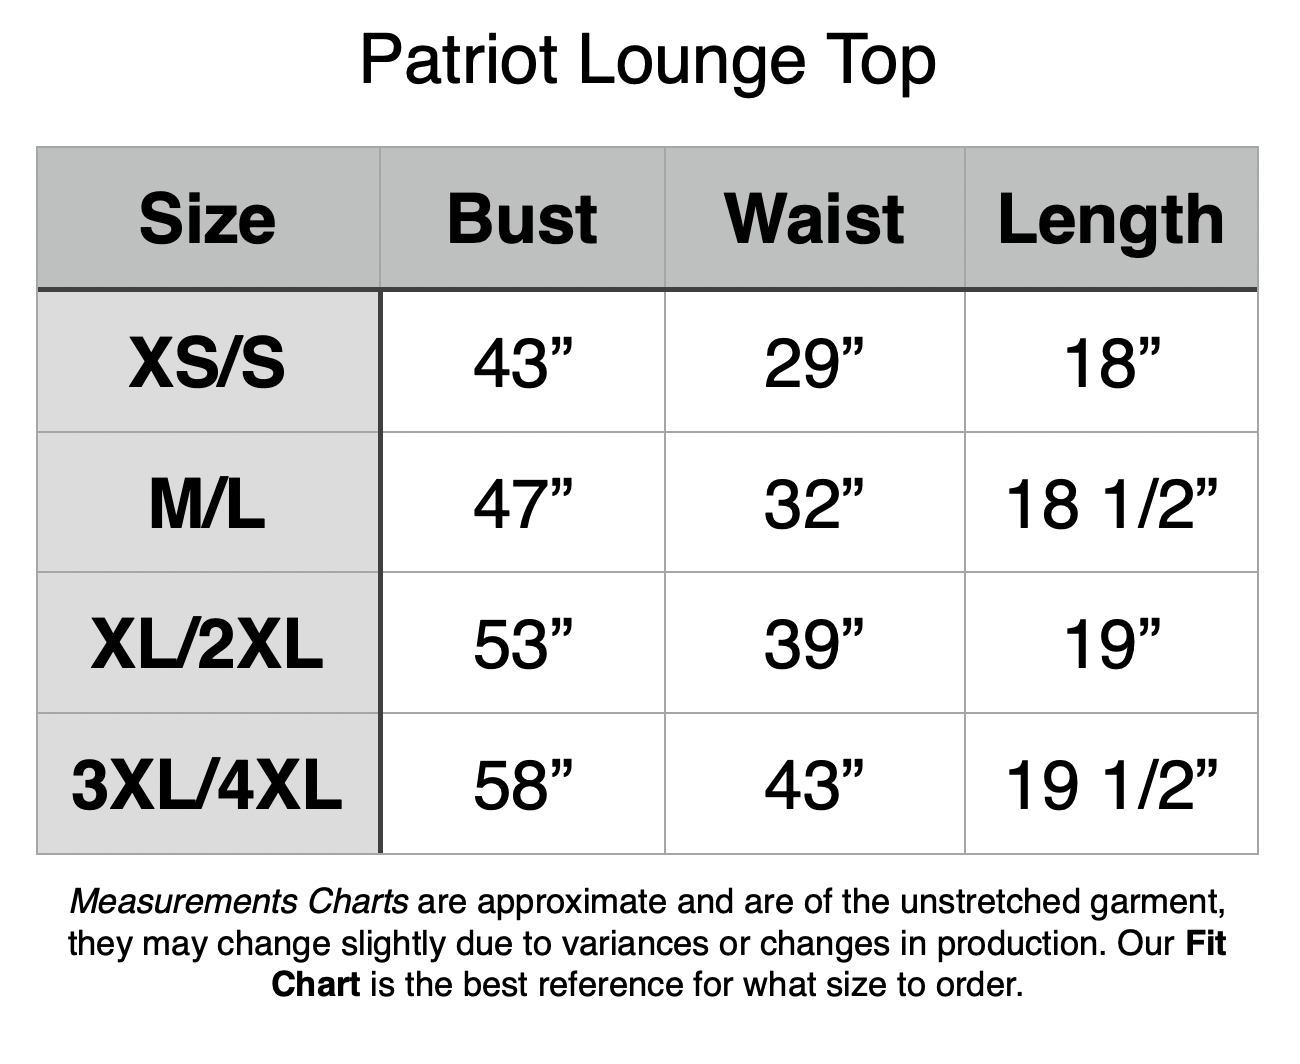 Patriot Lounge Top - XS/S: 43” Bust, 29” Waist, 18” Length. M/L: 47” Bust, 32” Waist, 18.5” Length. XL/2XL: 53” Bust, 39” Waist, 19” Length. 3XL/4XL: 58” Bust, 43” Waist, 19.5” Length.